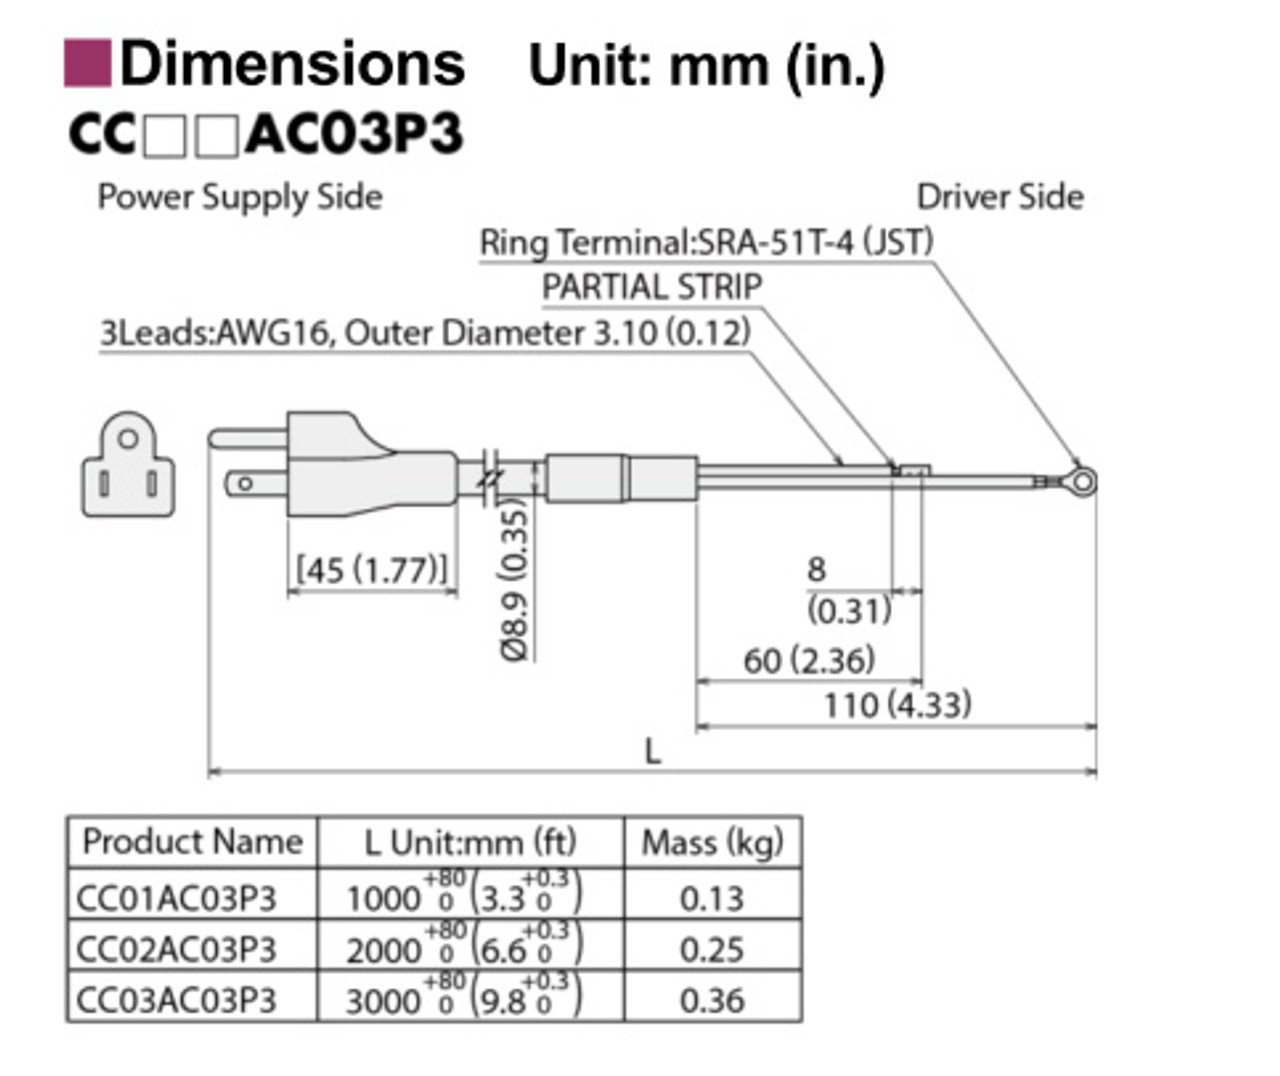 CC02AC03P3 - Dimensions